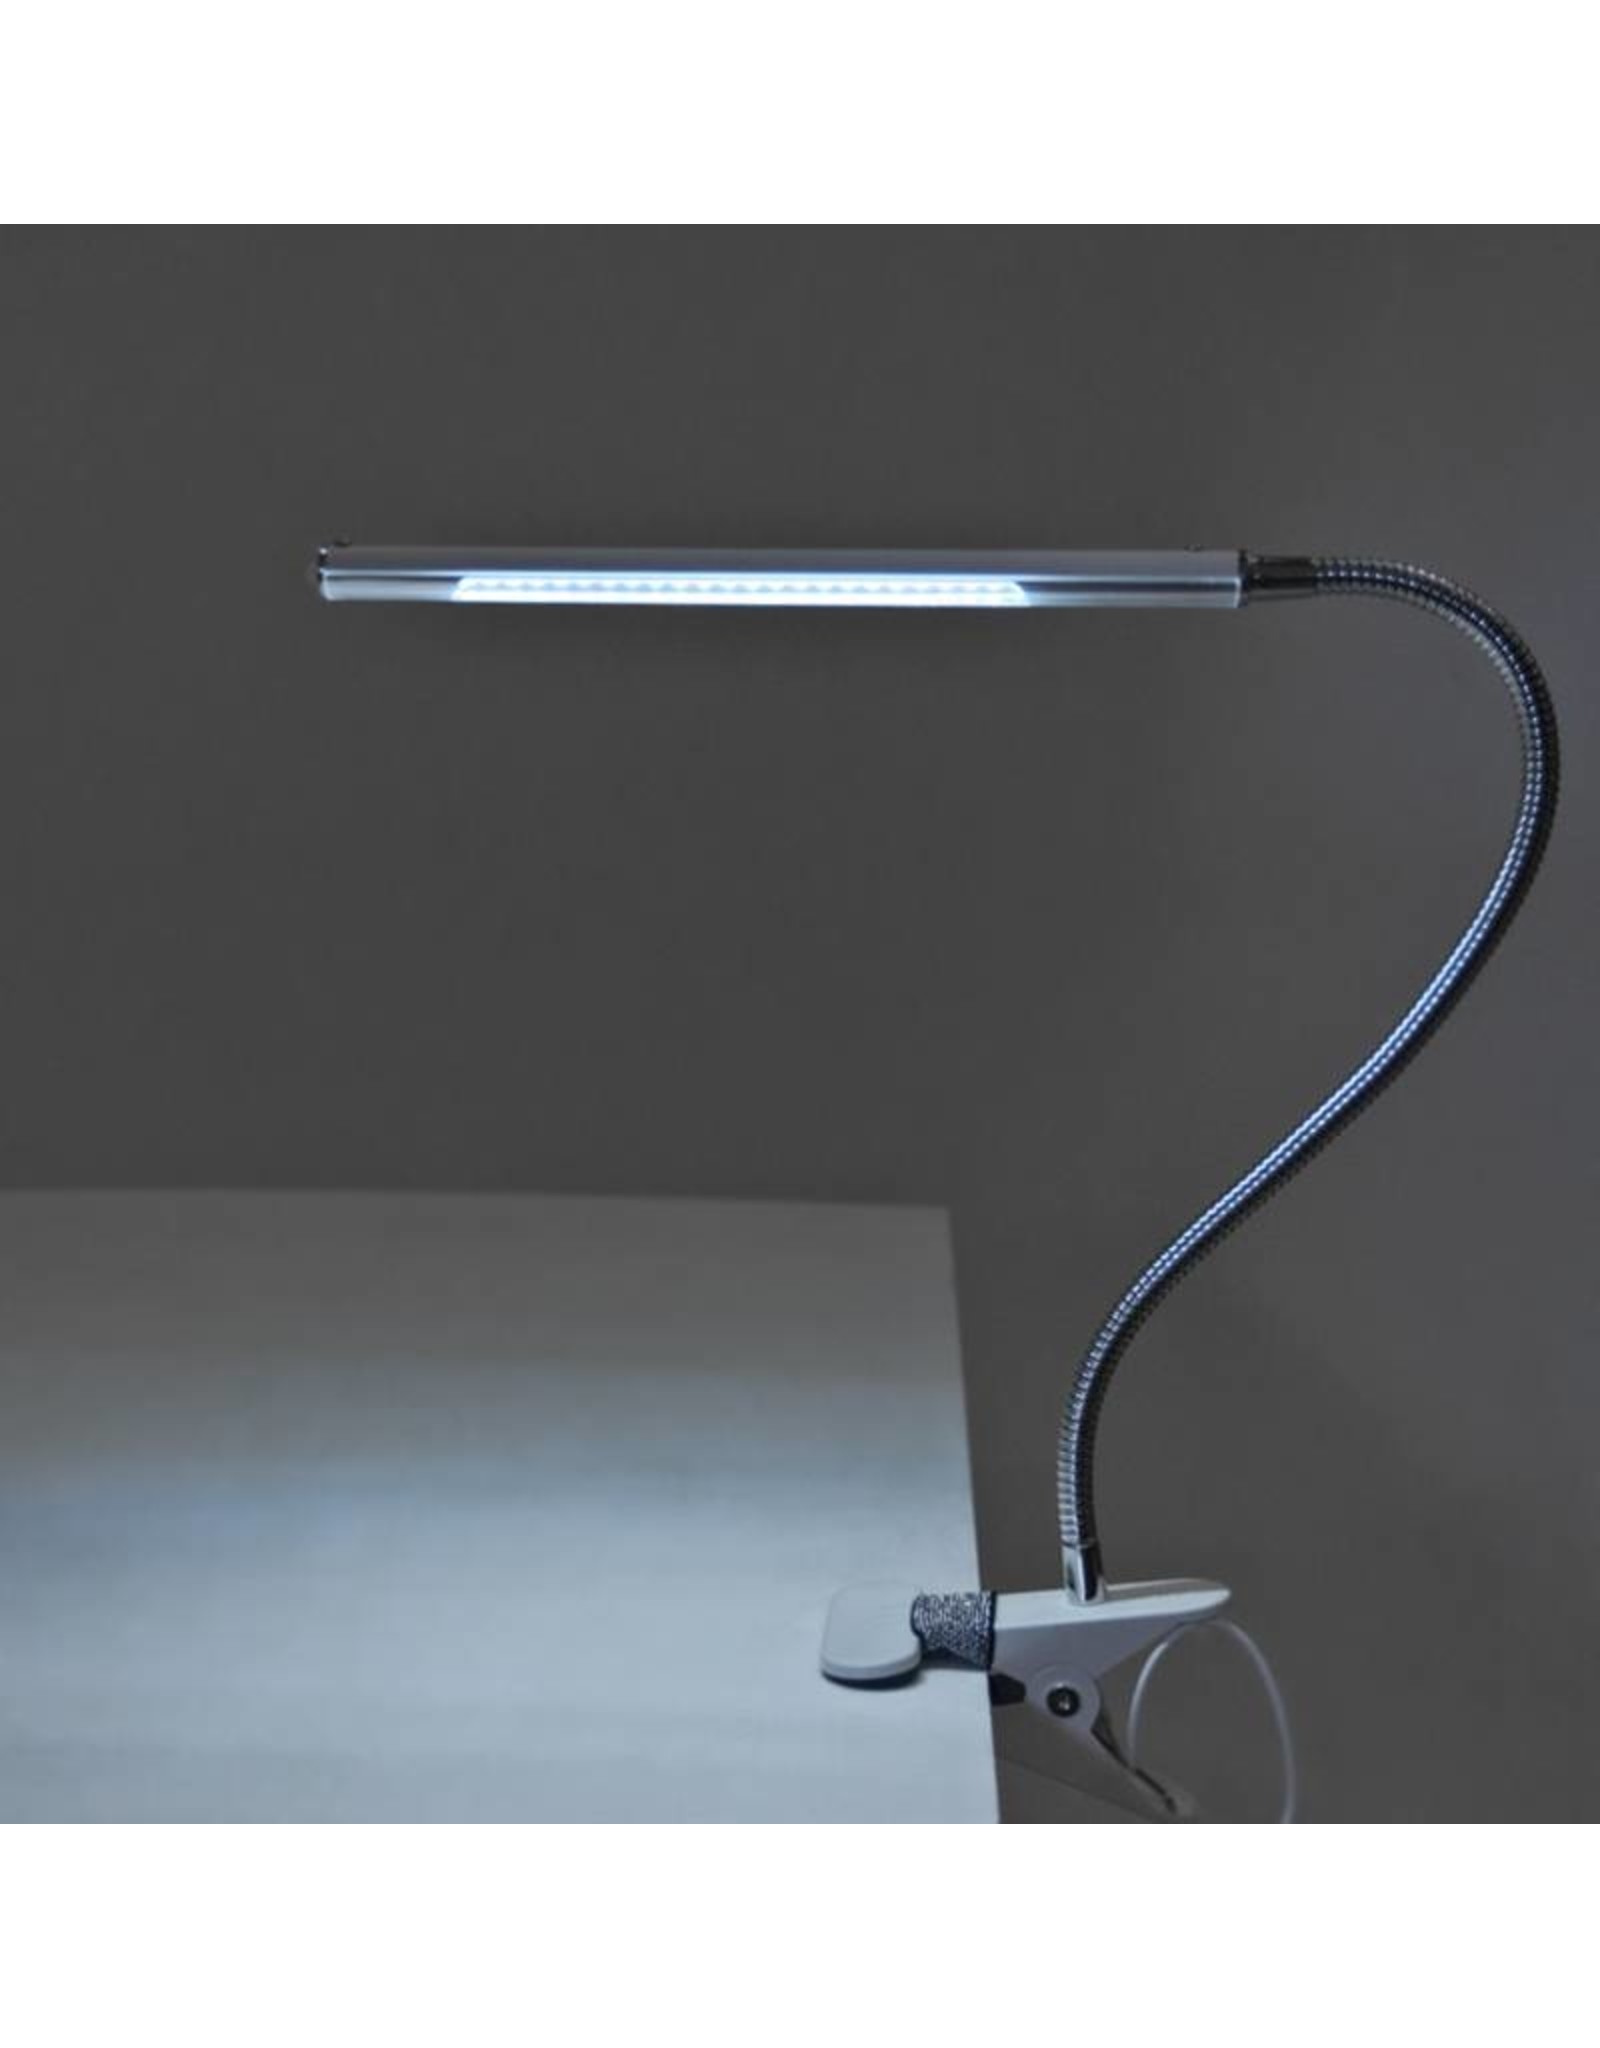 Merkloos LED Tafellamp Blauw met een flexibele arm op tafelklem.